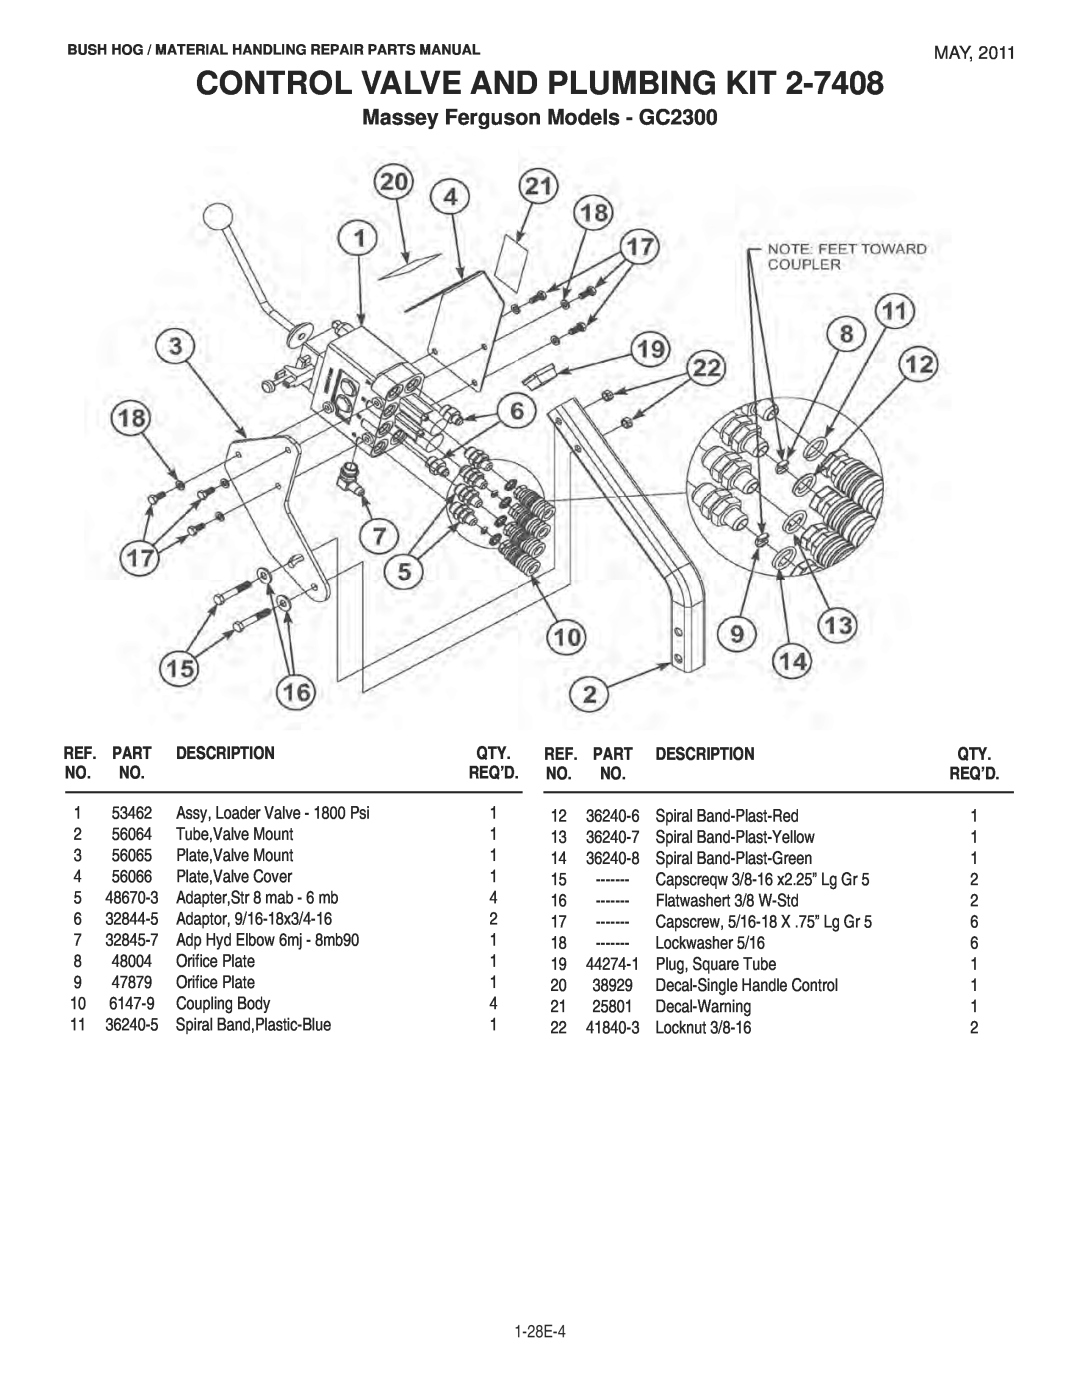 Bush Hog 1747 manual Control Valve And Plumbing Kit, Massey Ferguson Models - GC2300, Description 